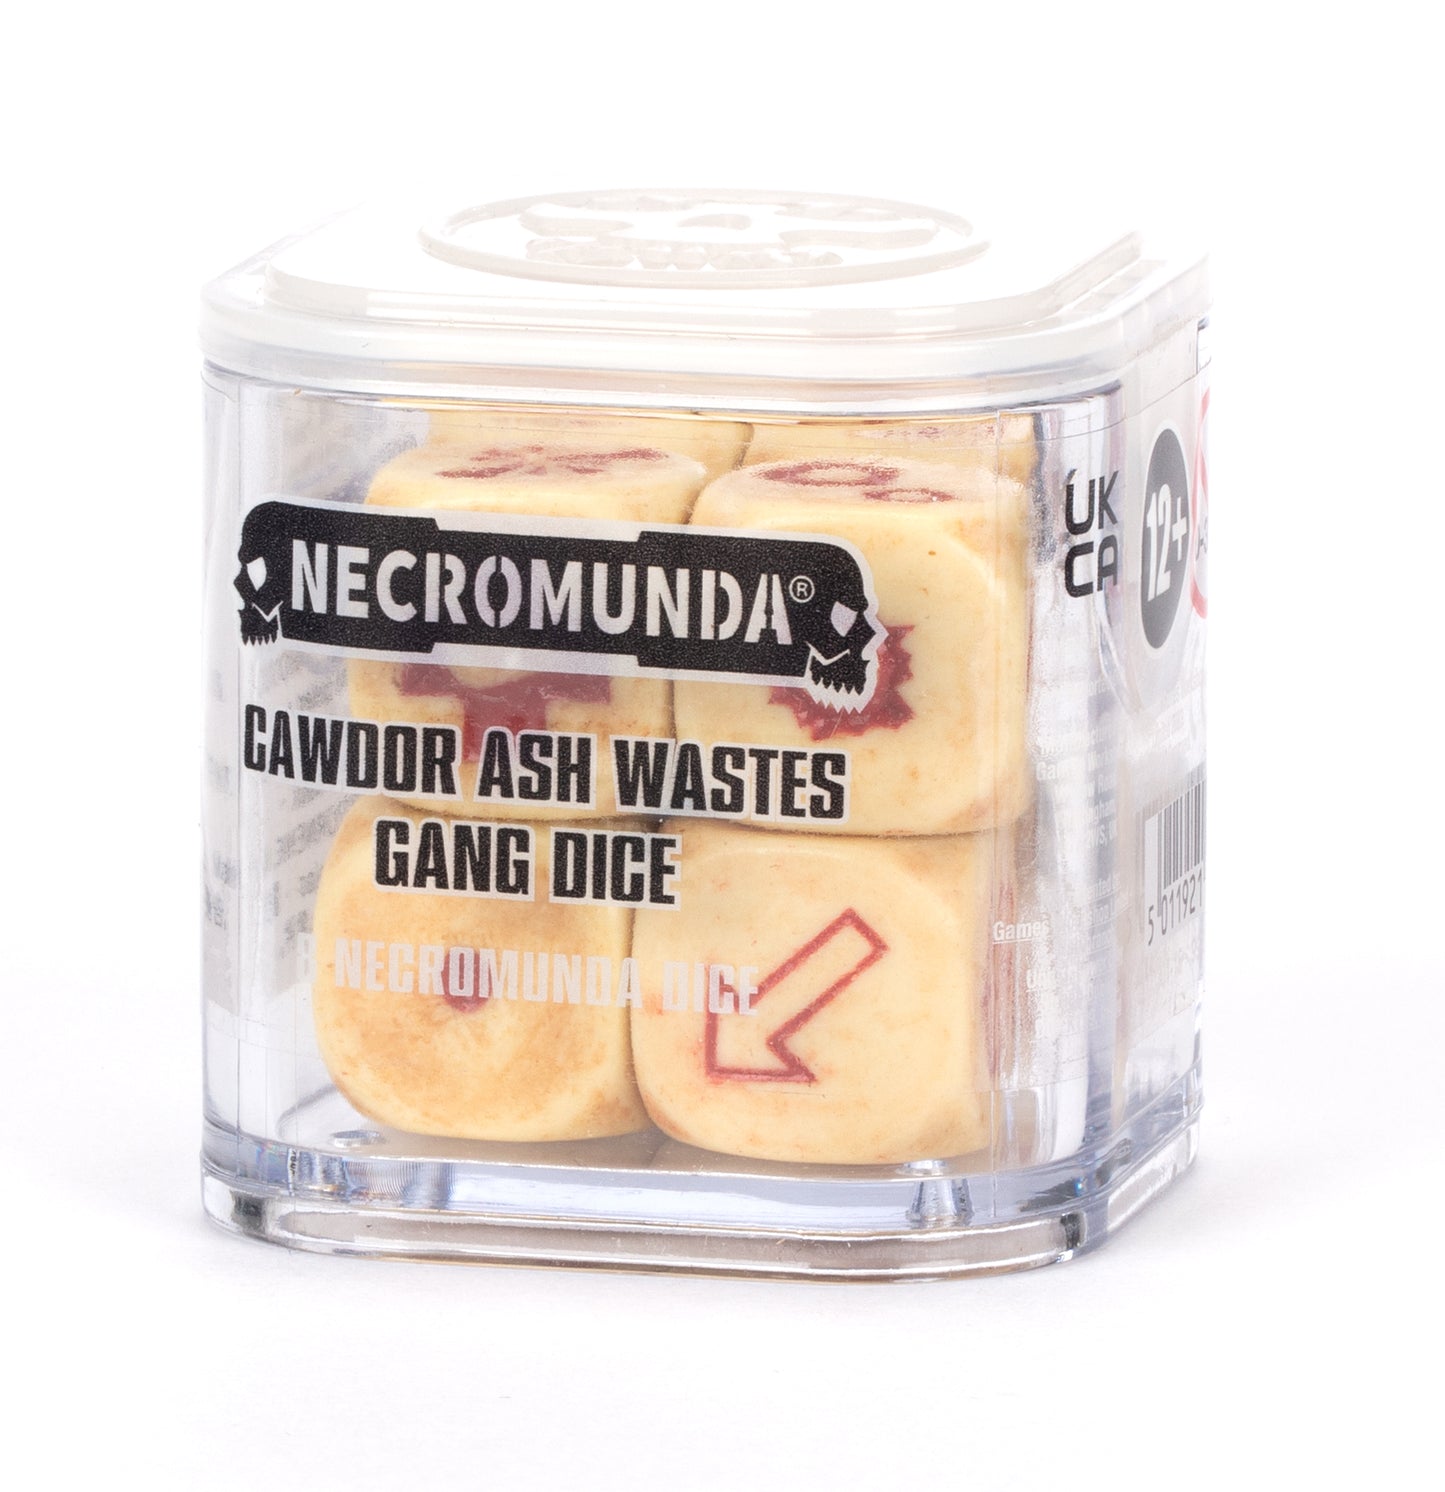 Necromunda Cawdor Ash Wastes Gang Dice